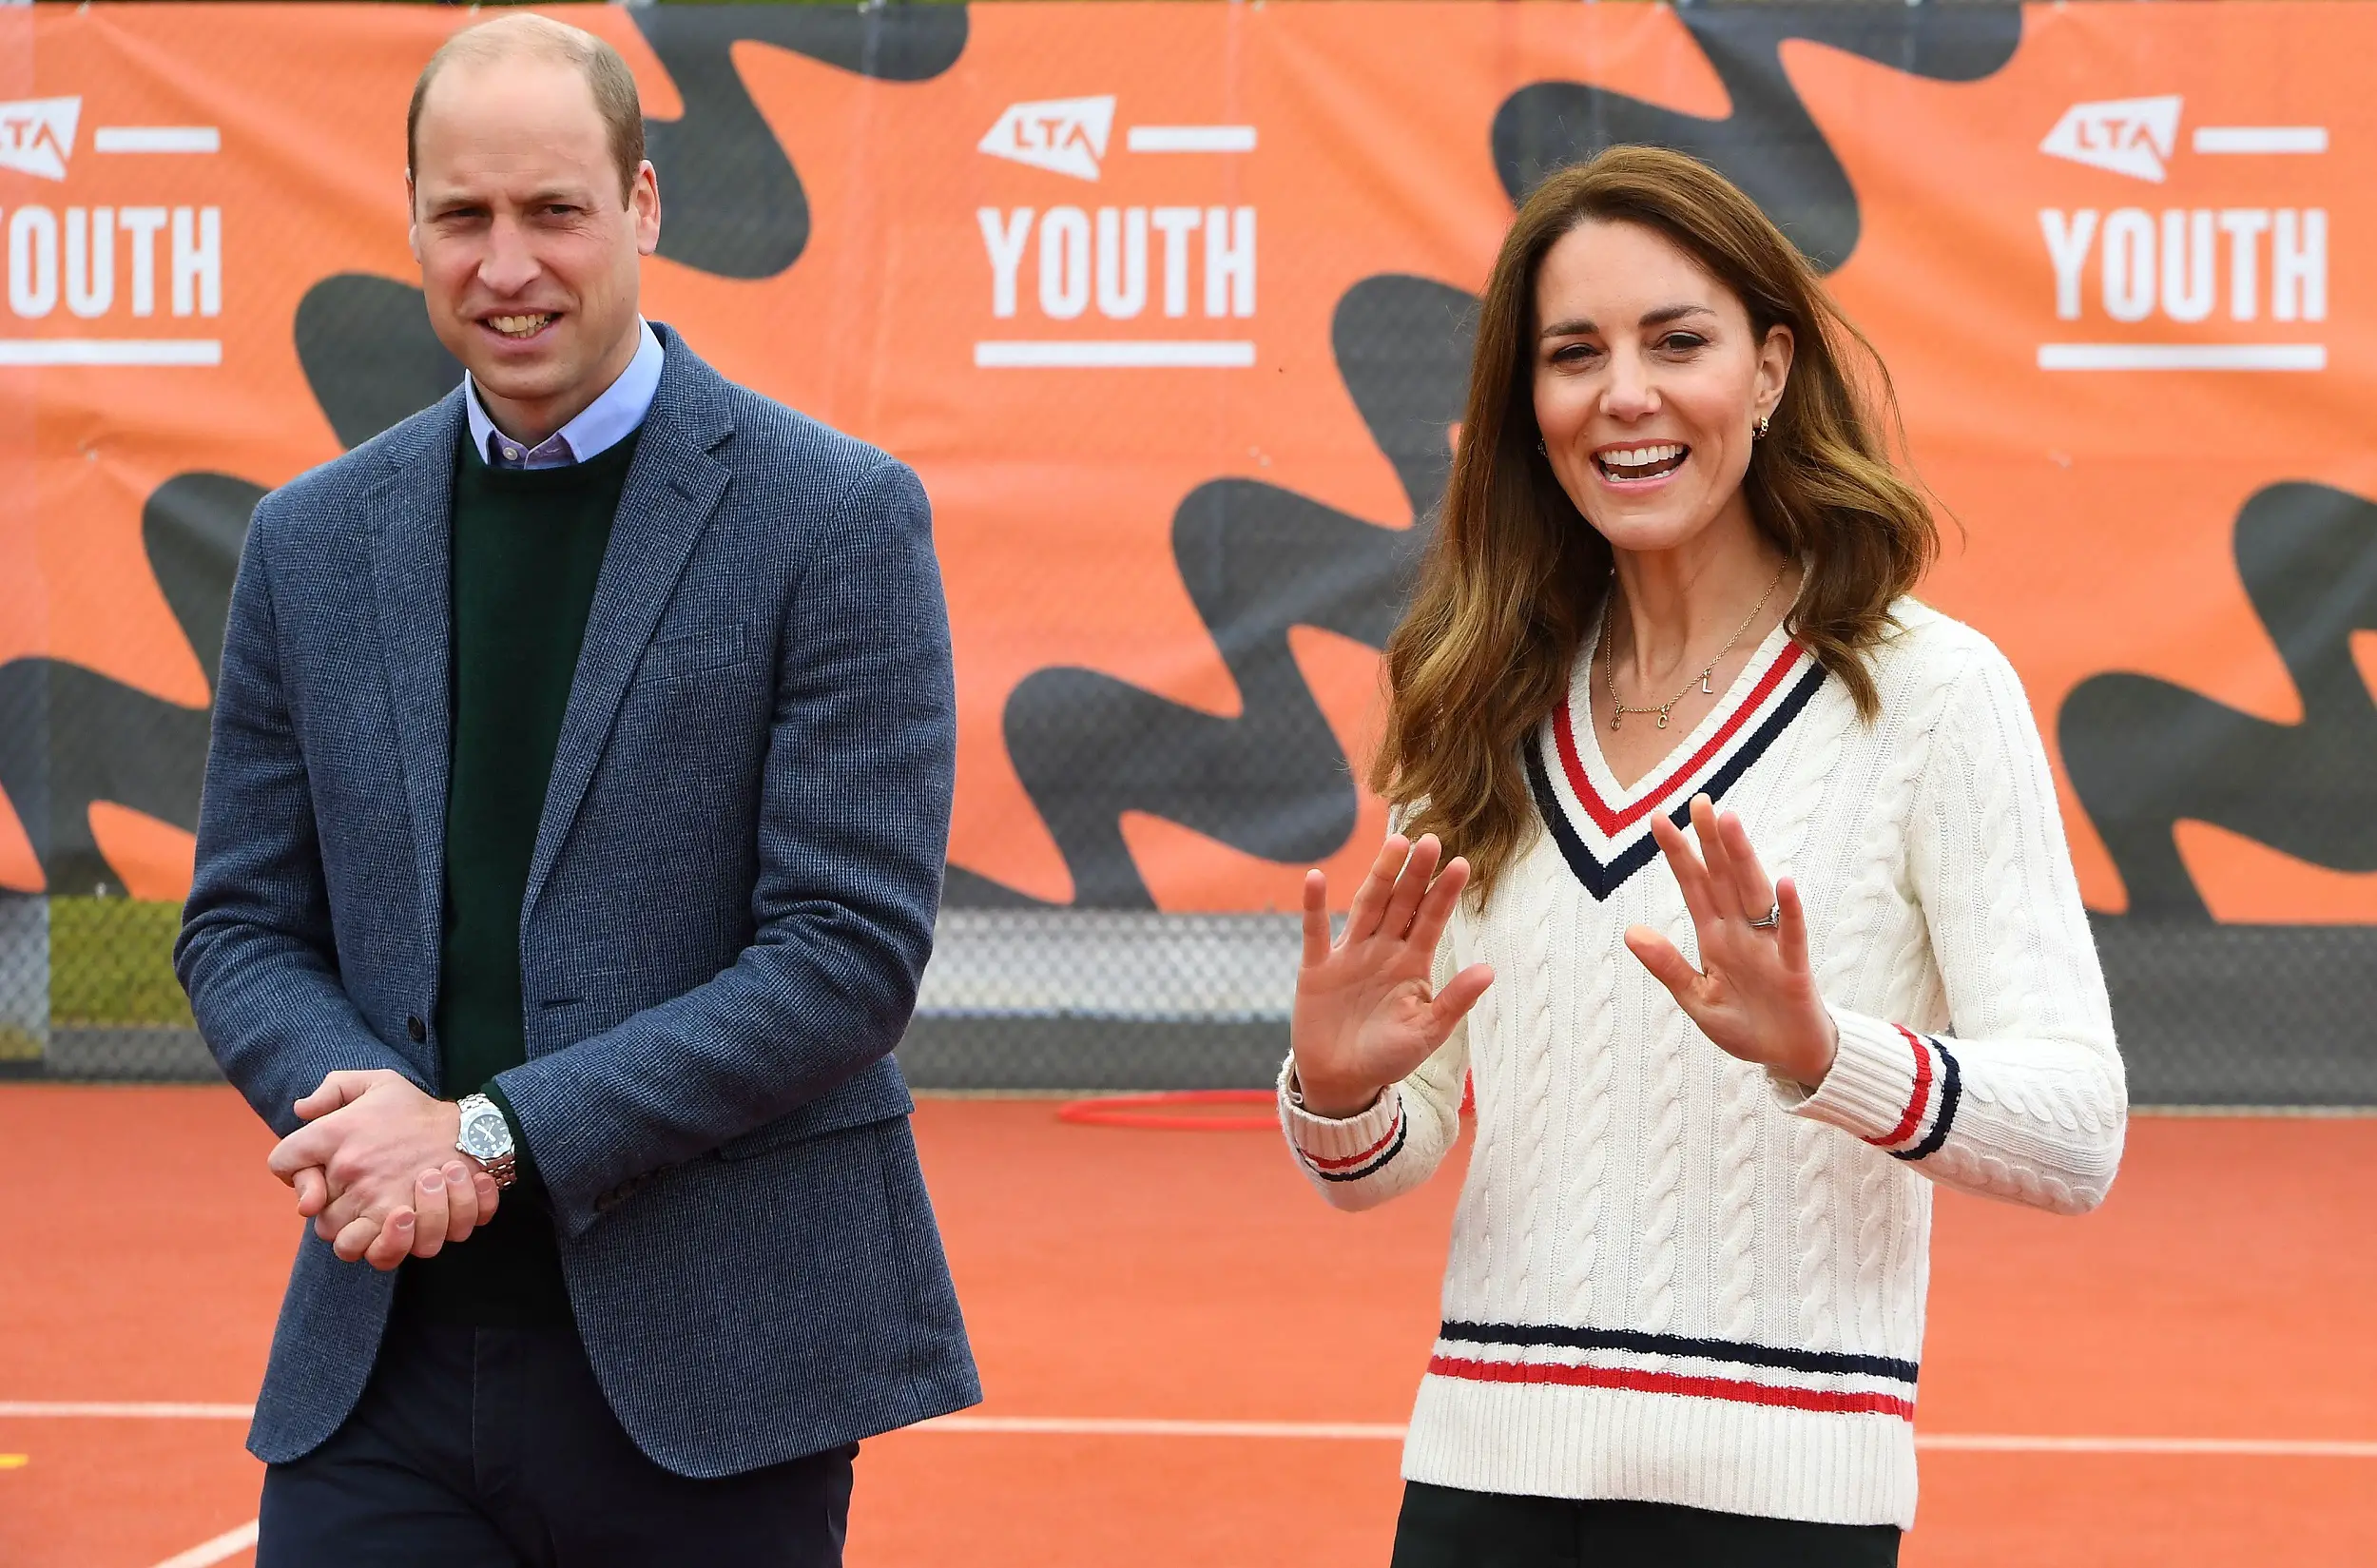 The Duke and Duchess of Cambridge played tennis in Ediburgh